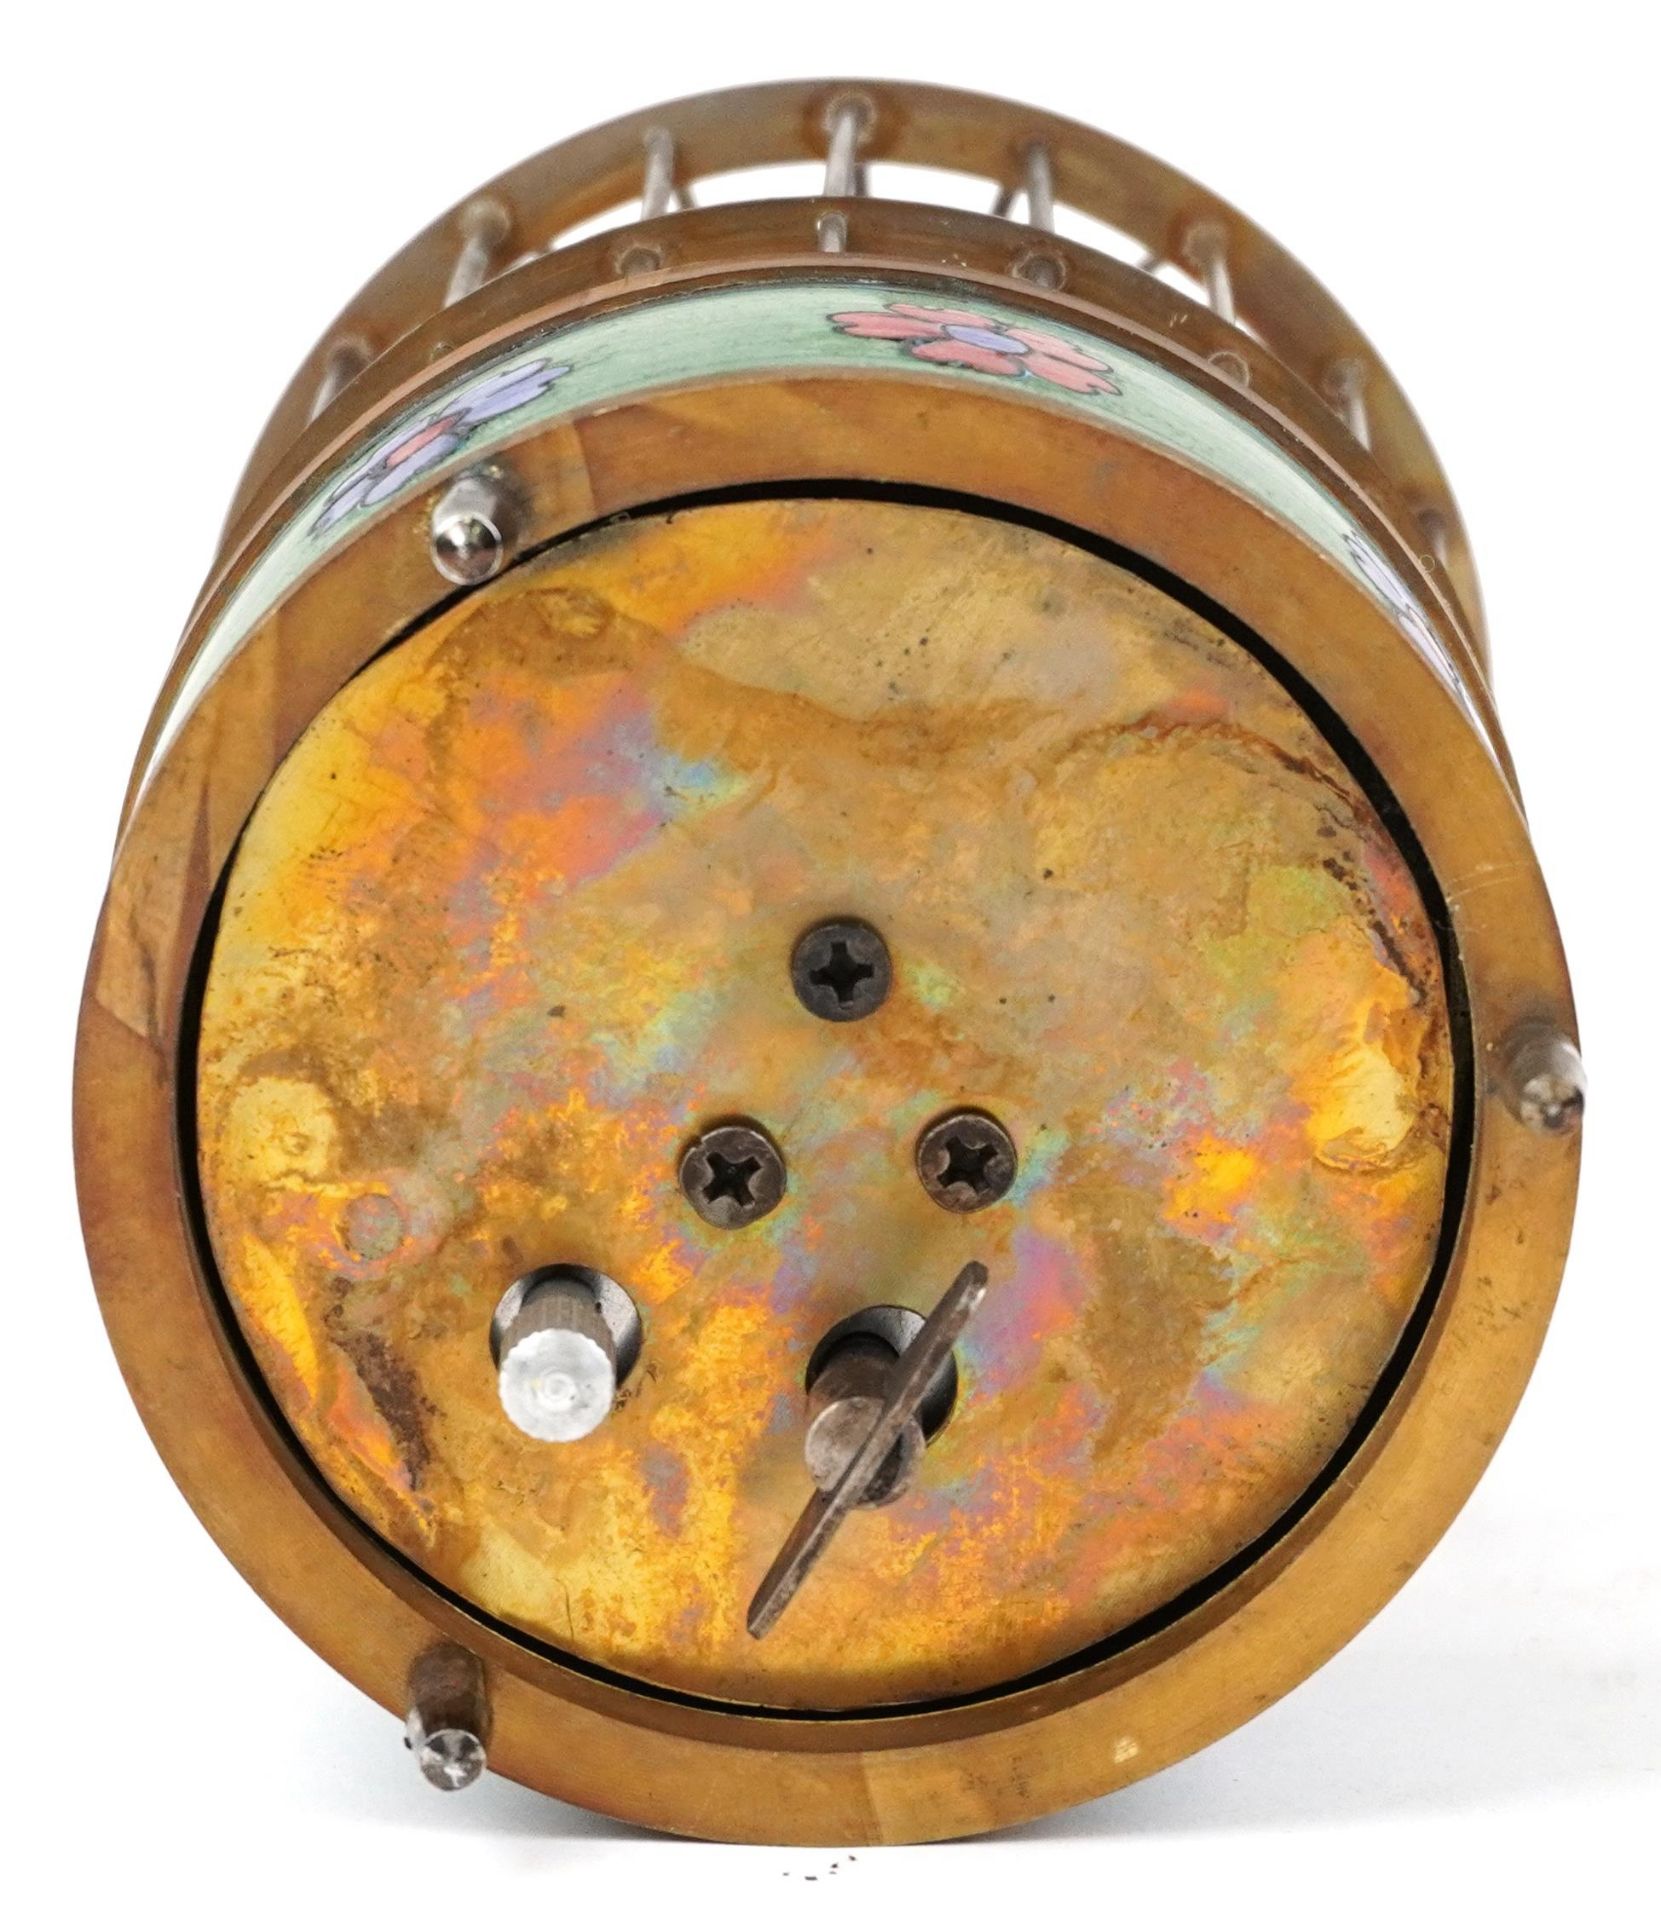 Clockwork automaton birdcage alarm clock with cloisonne band, 15.5cm high - Image 3 of 3